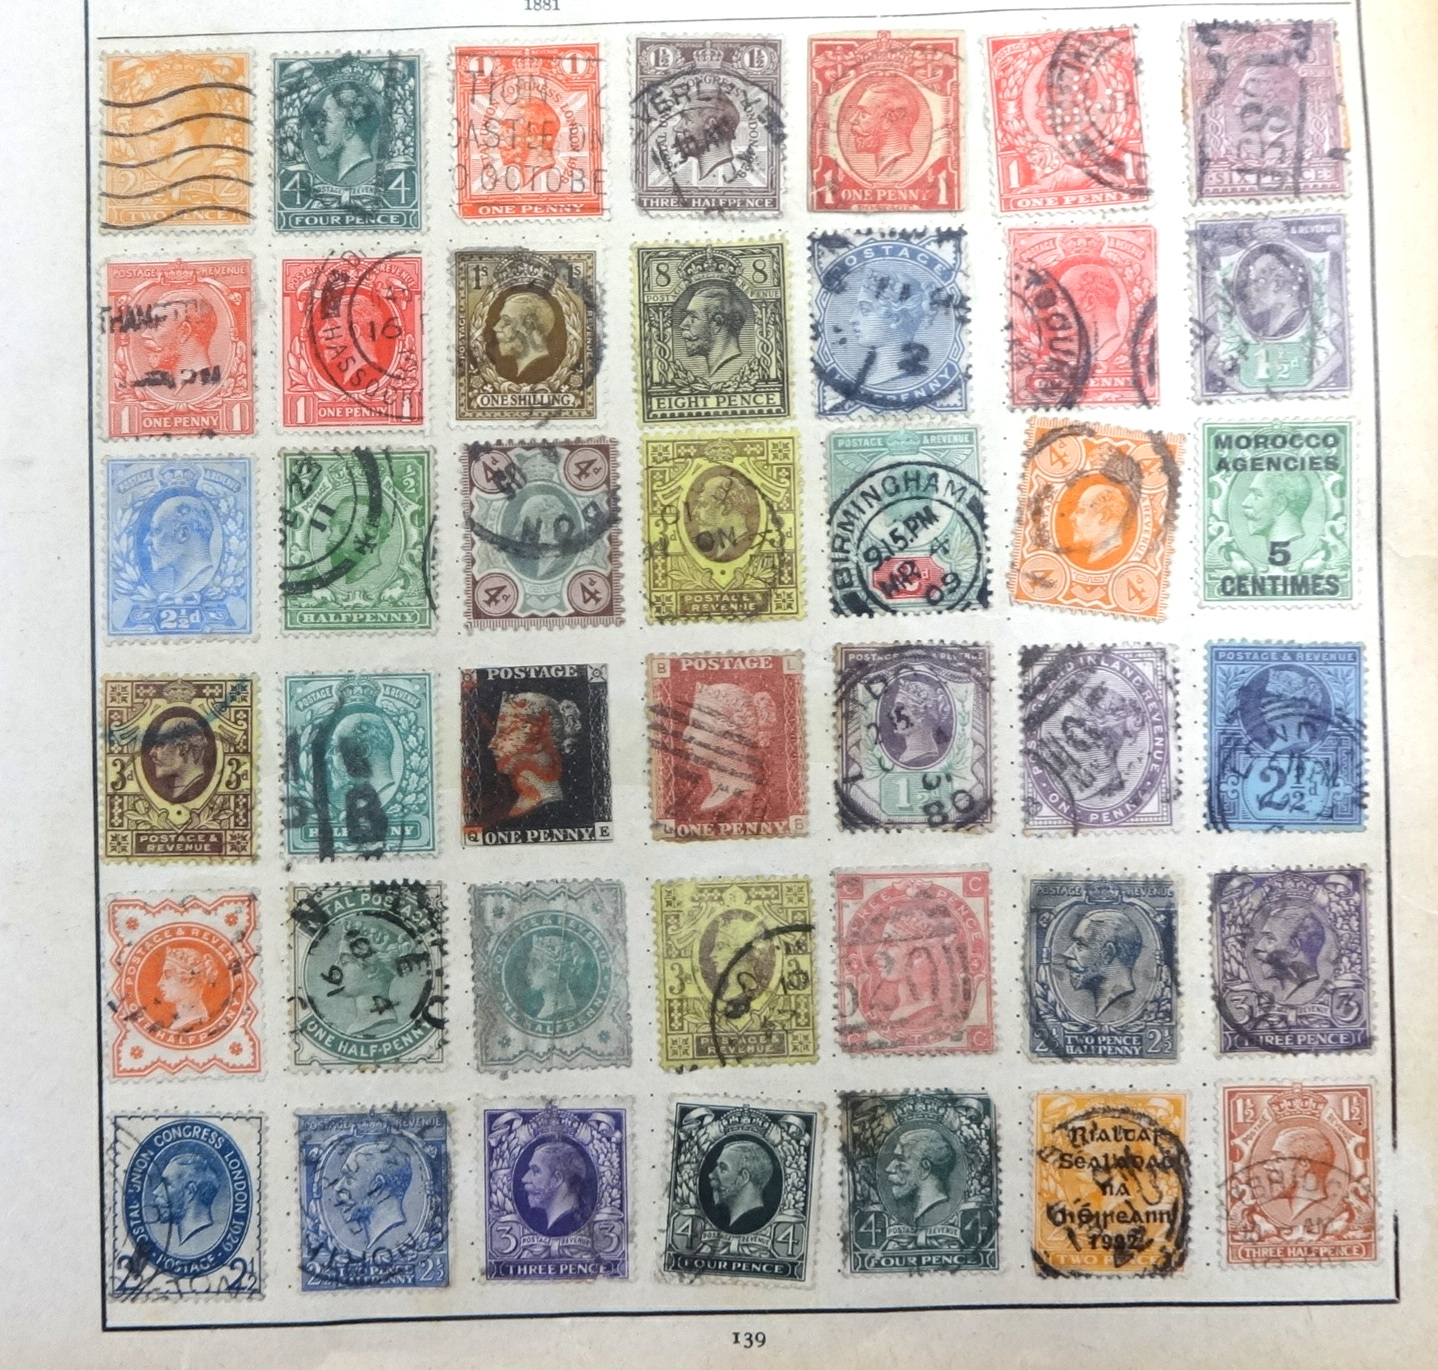 Strand stamp album of World stamps including 1840 penny black